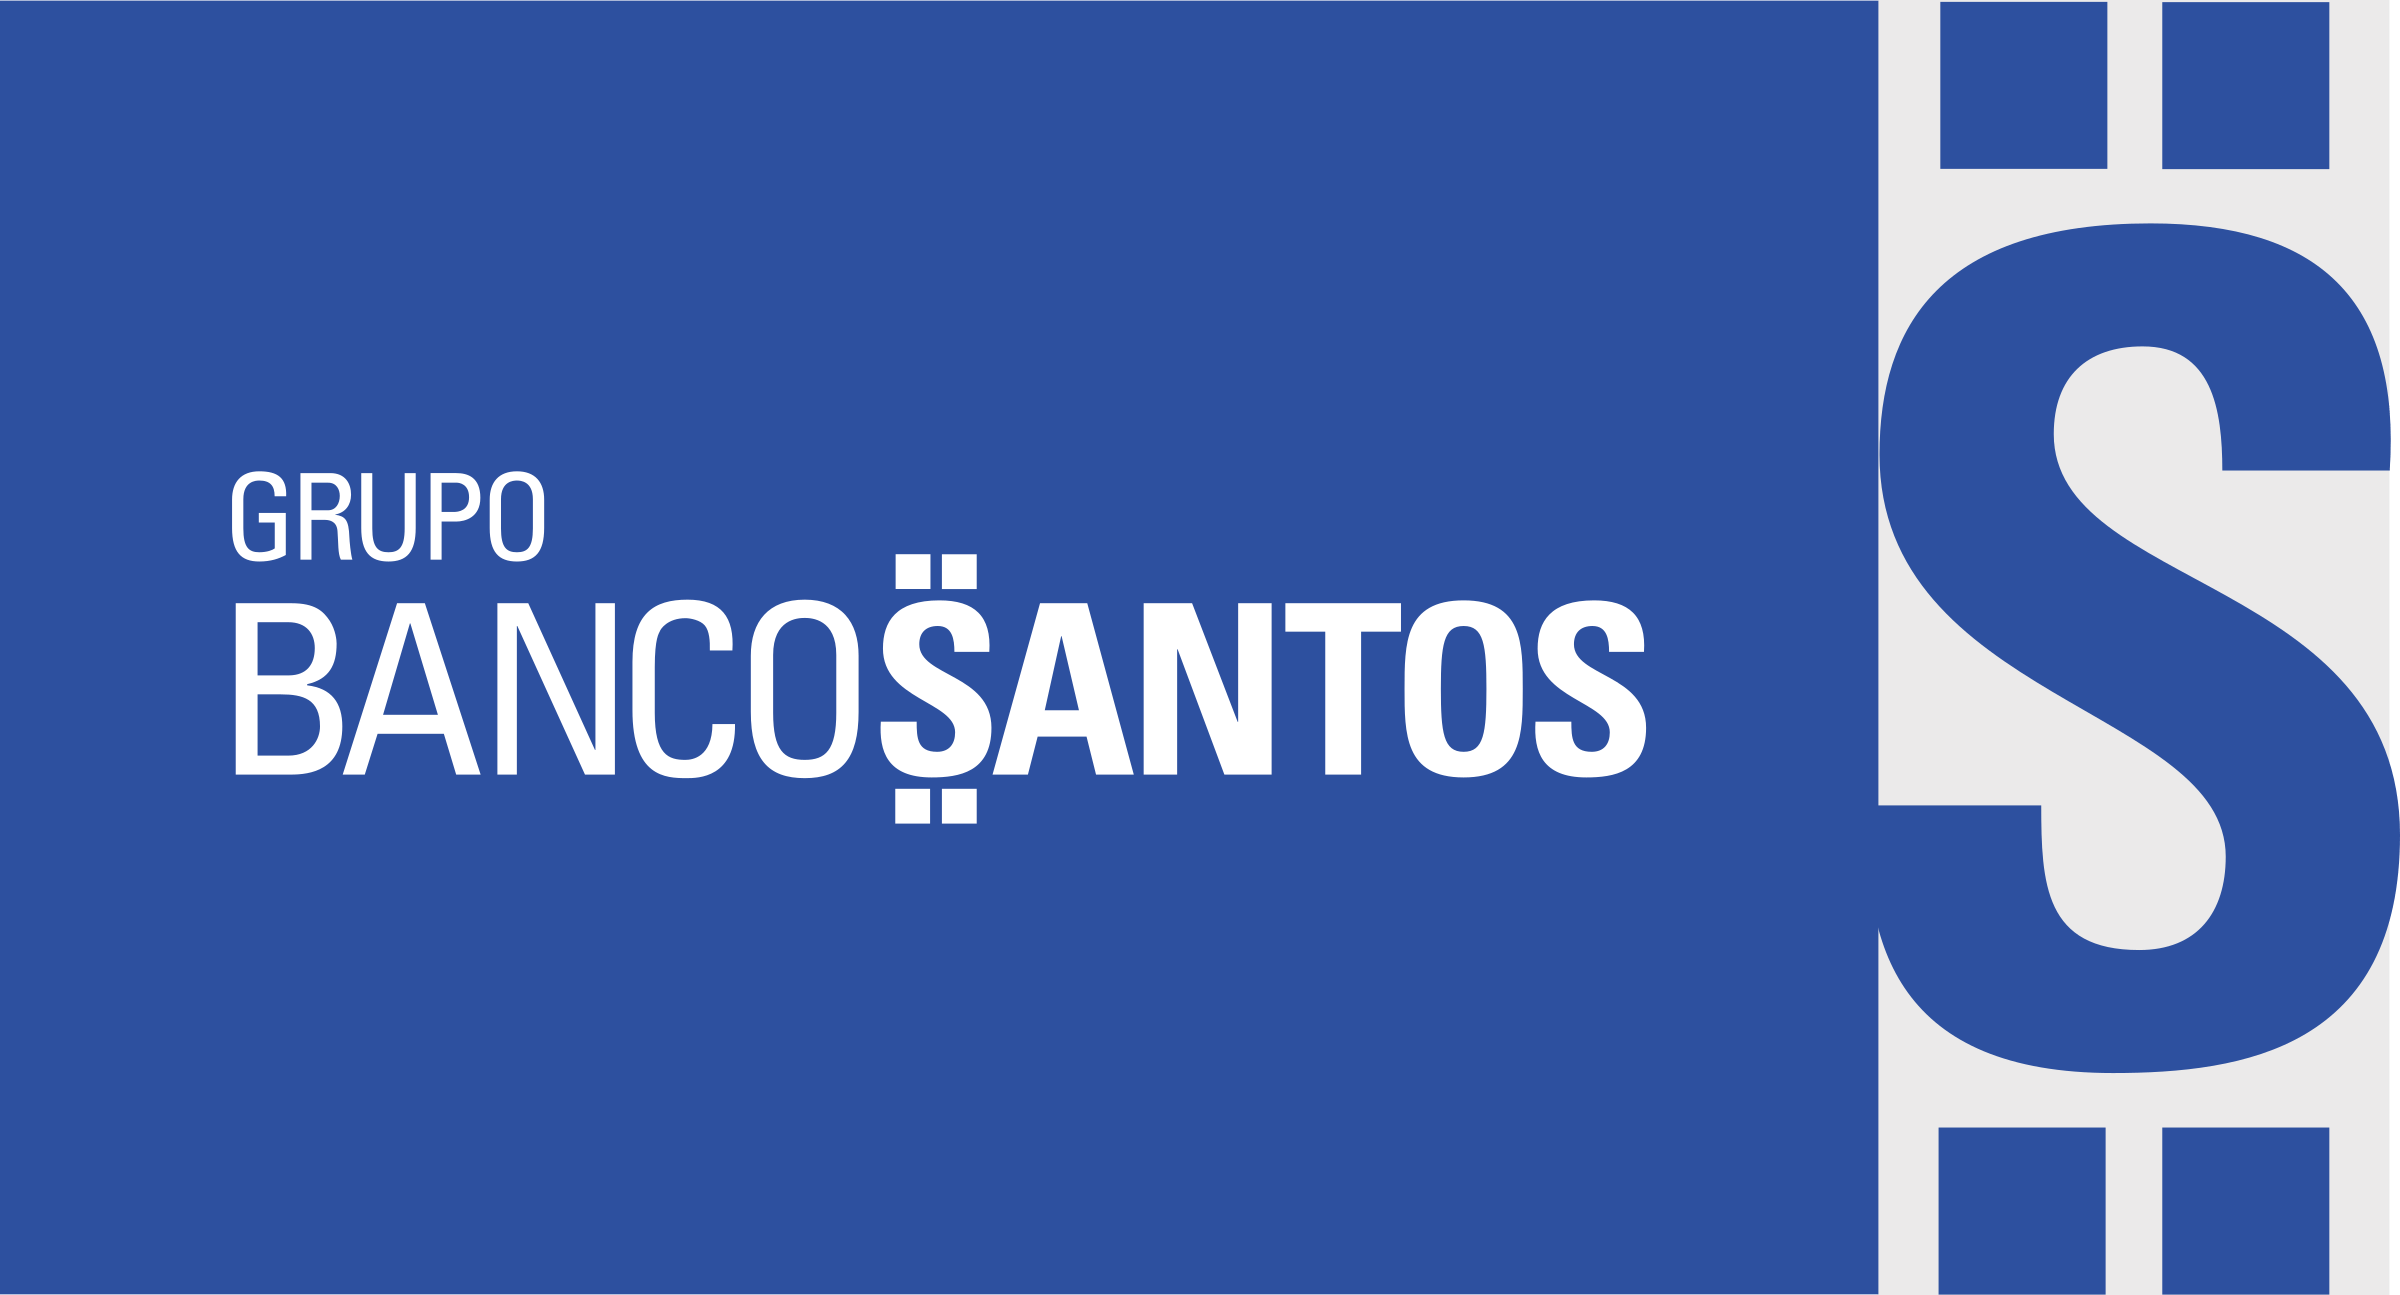 Santos Logo - banco santos Logo PNG Transparent & SVG Vector